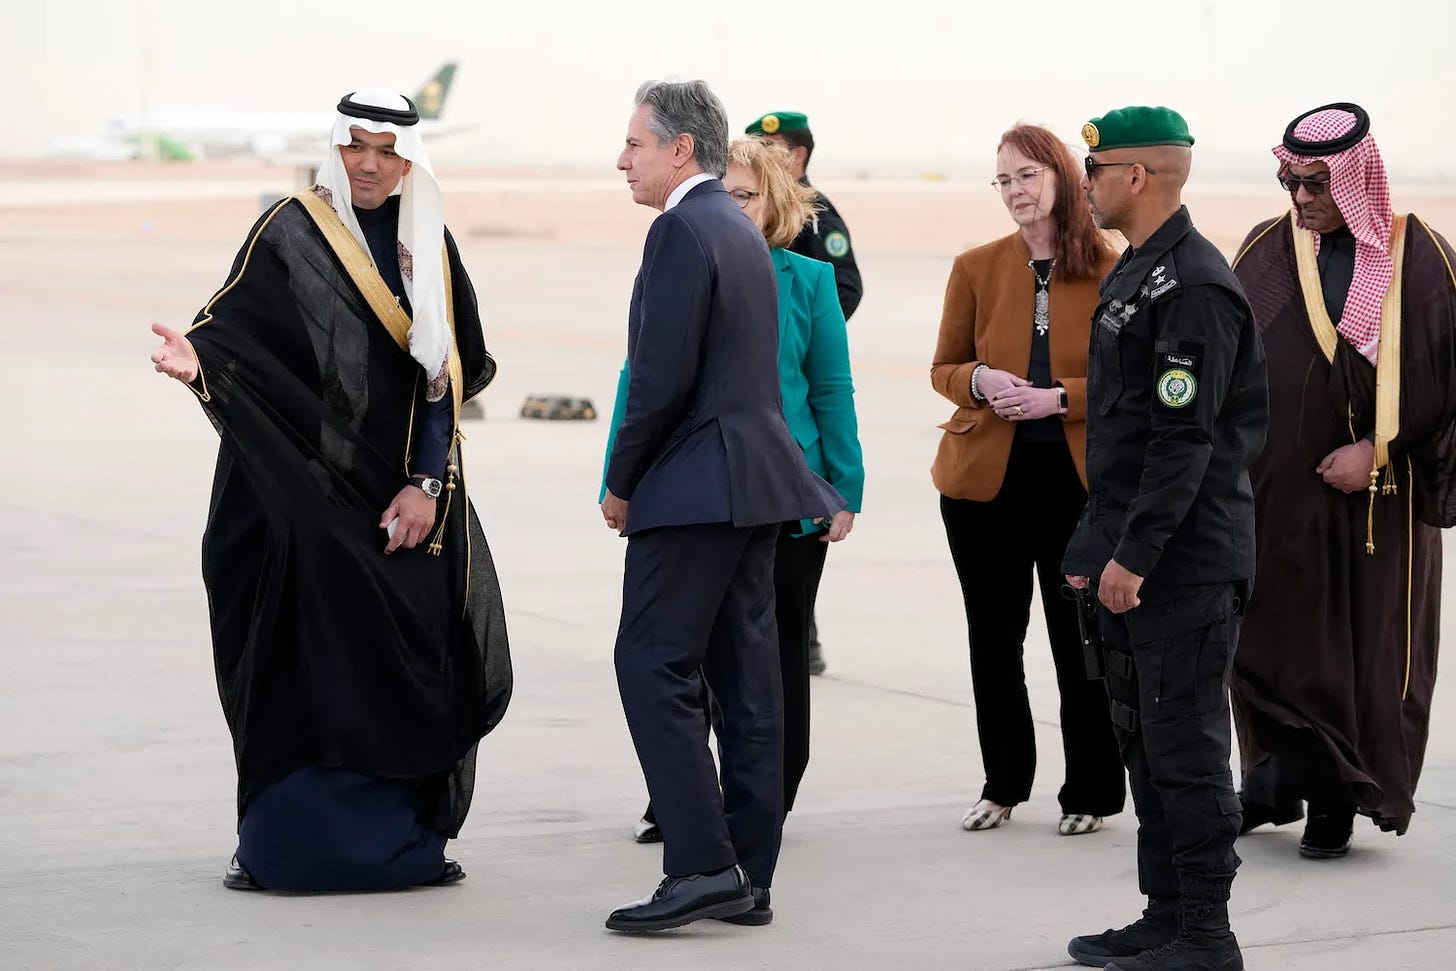 U.S. Secretary of State Antony Blinken disembarks from a plane in Saudi Arabia.